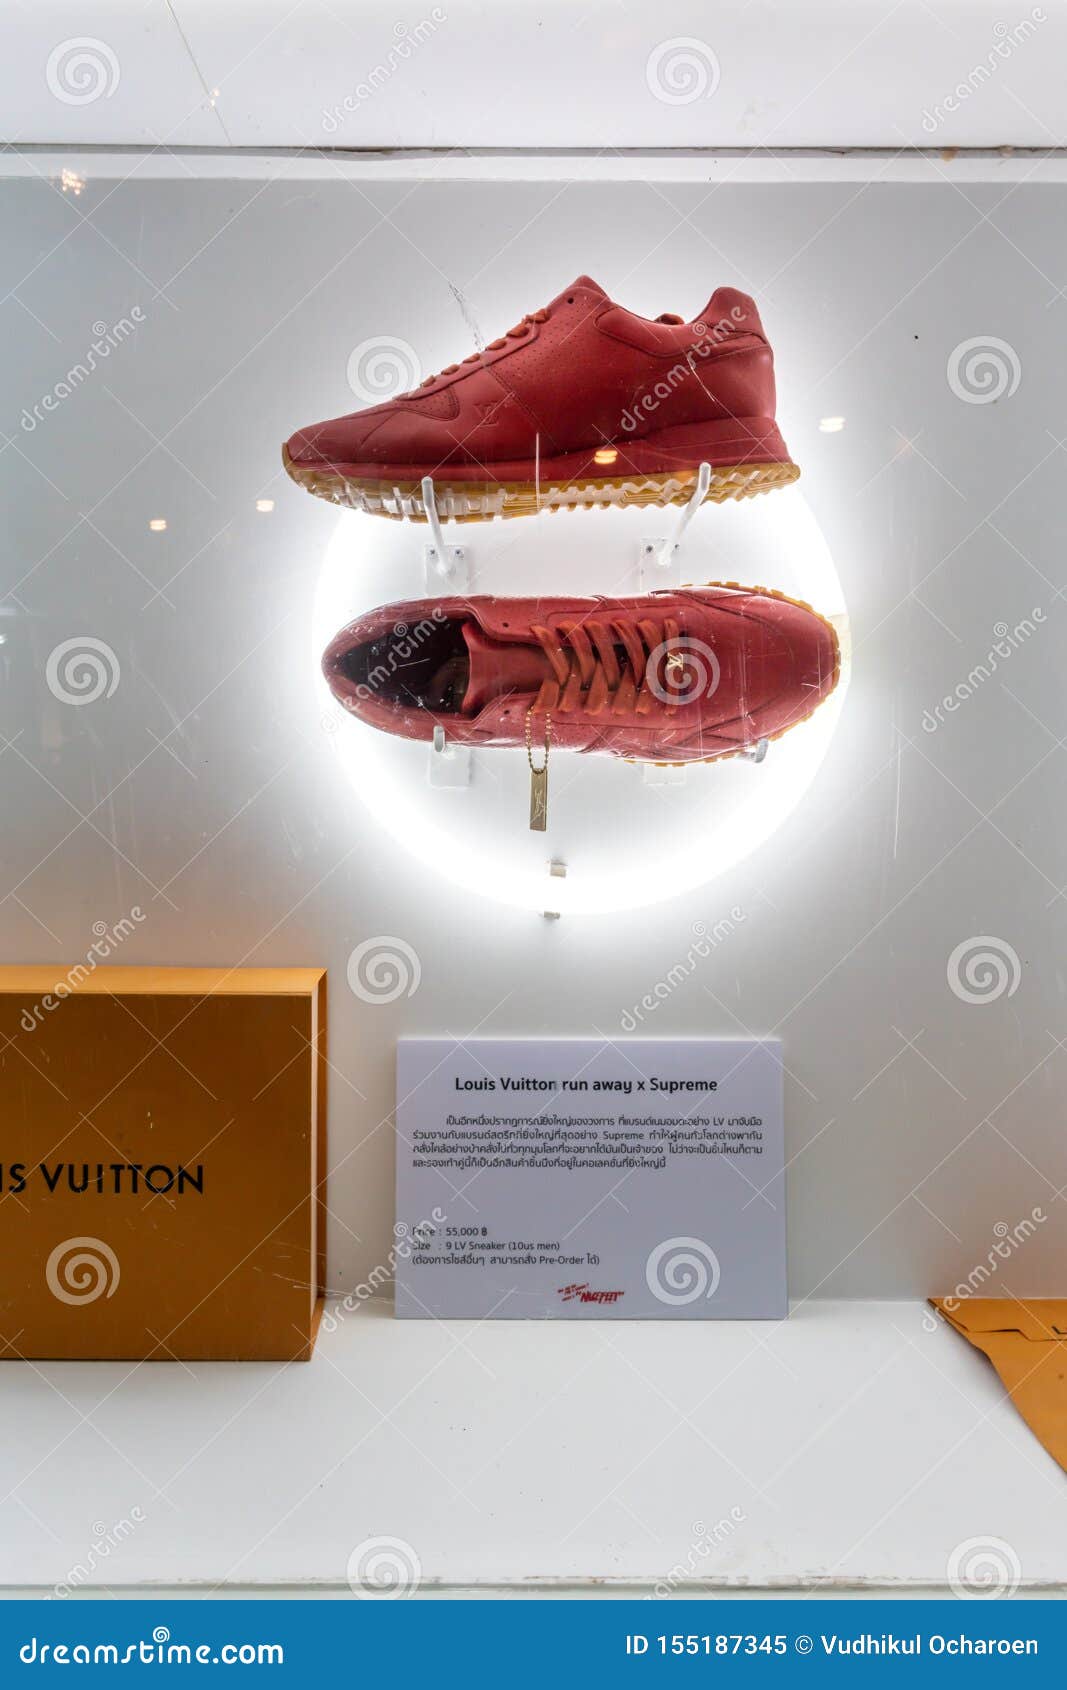 Vuitton Box Stock Photos - Free & Royalty-Free Stock Photos from